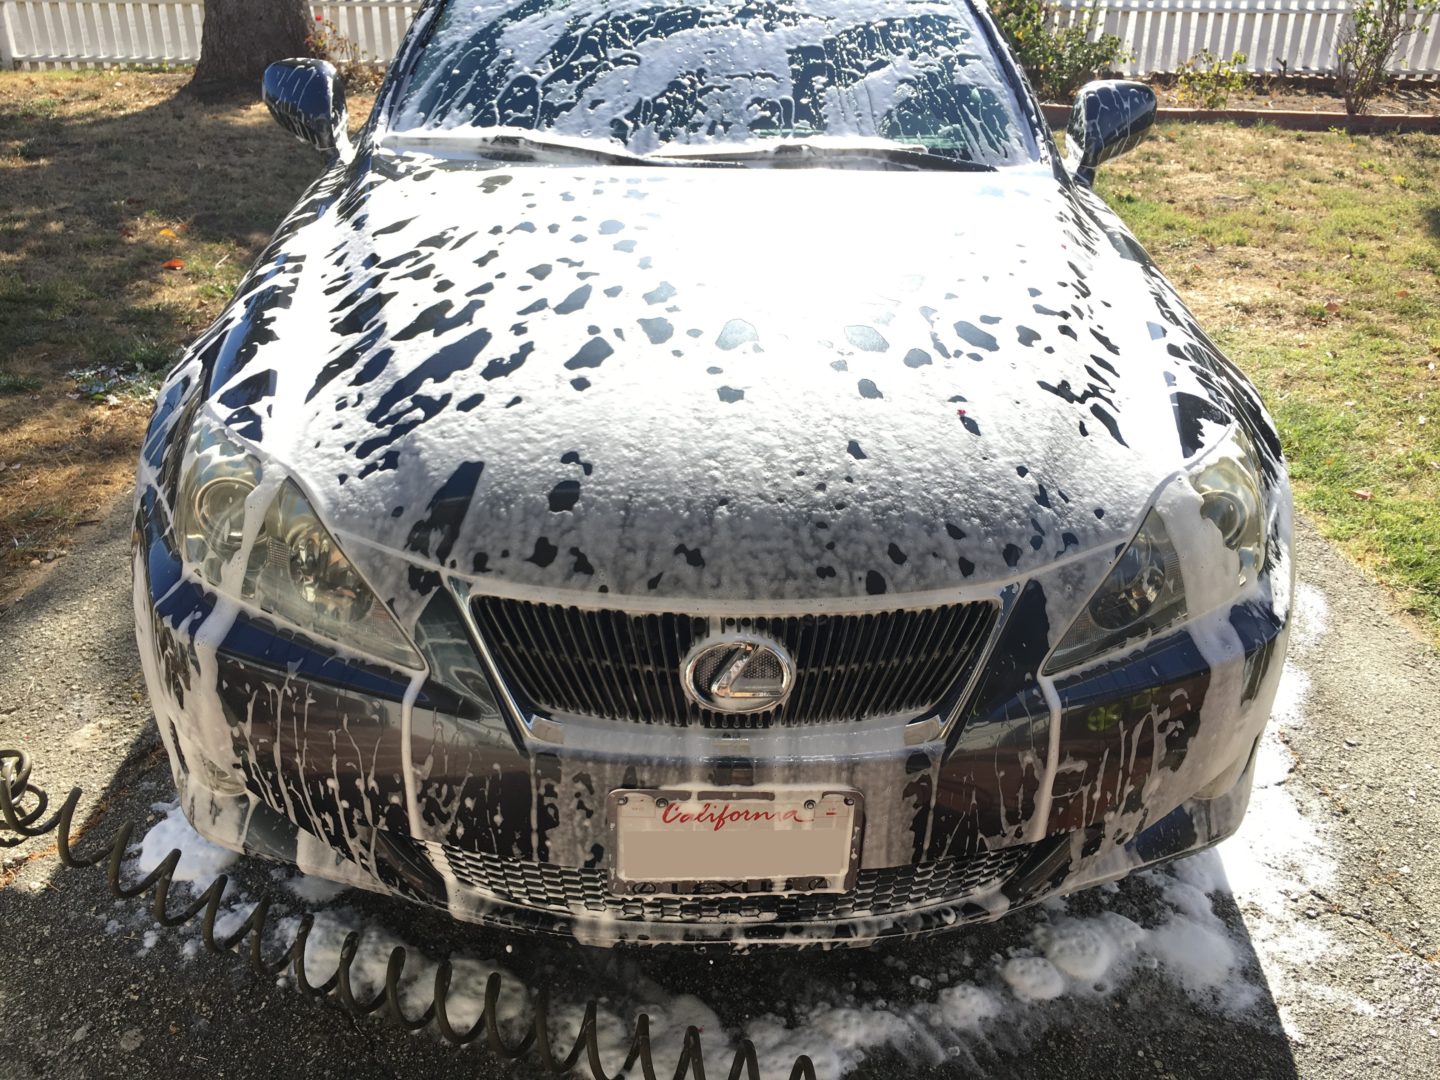 O'Reilly's Pro X One Snow Foam Car Soap, Review & Testing